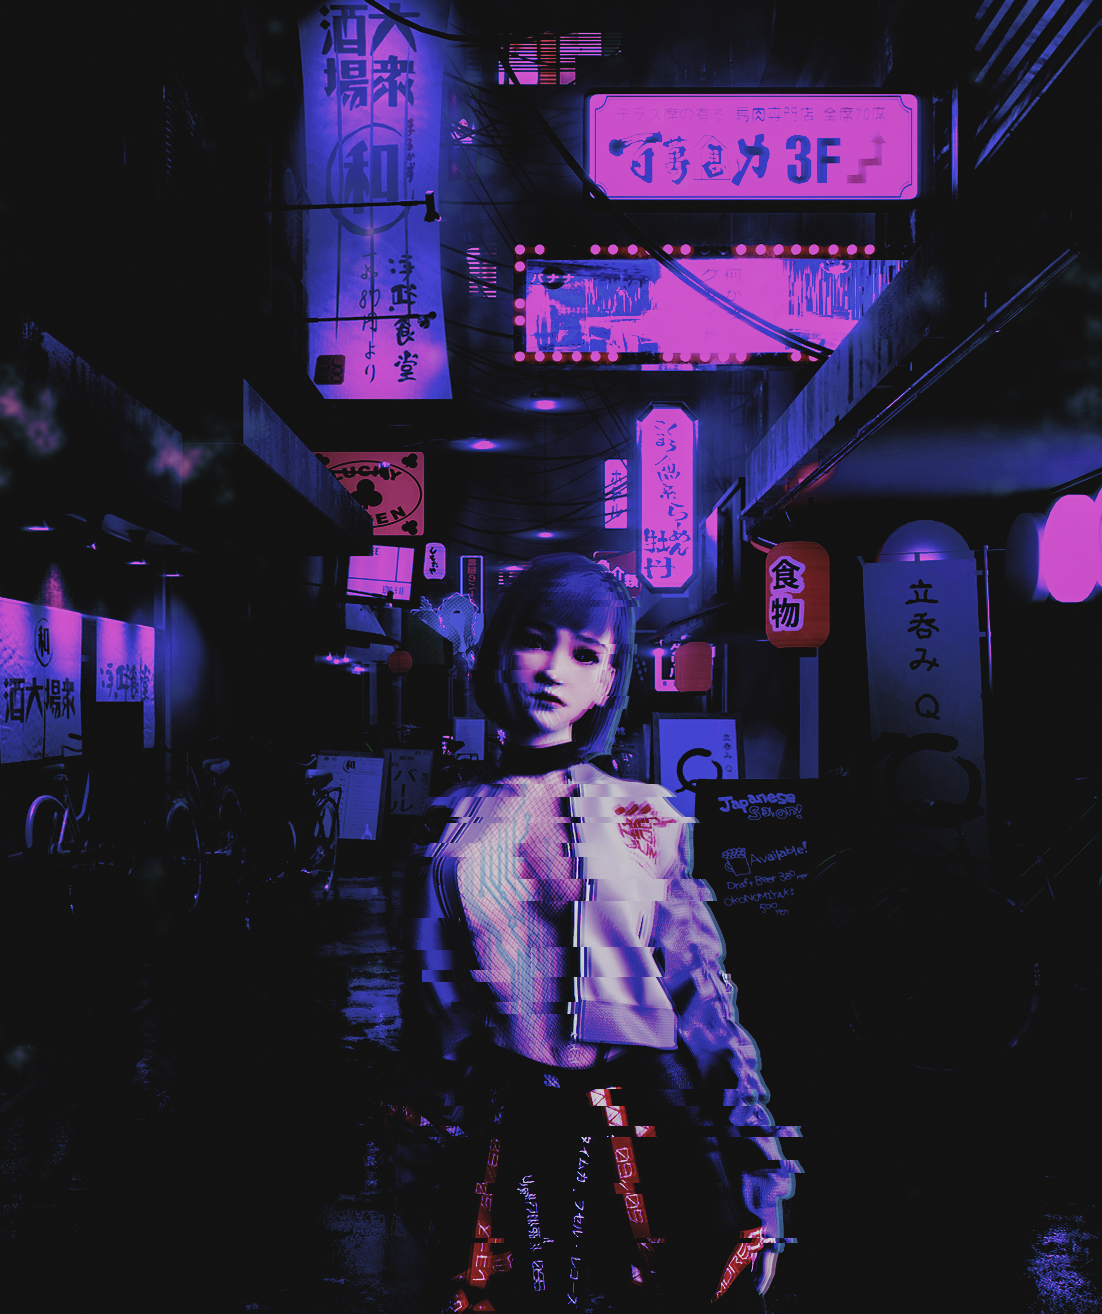 Wallpaper, Retrowave, women, artwork, Japan, vertical, neon 1102x1314